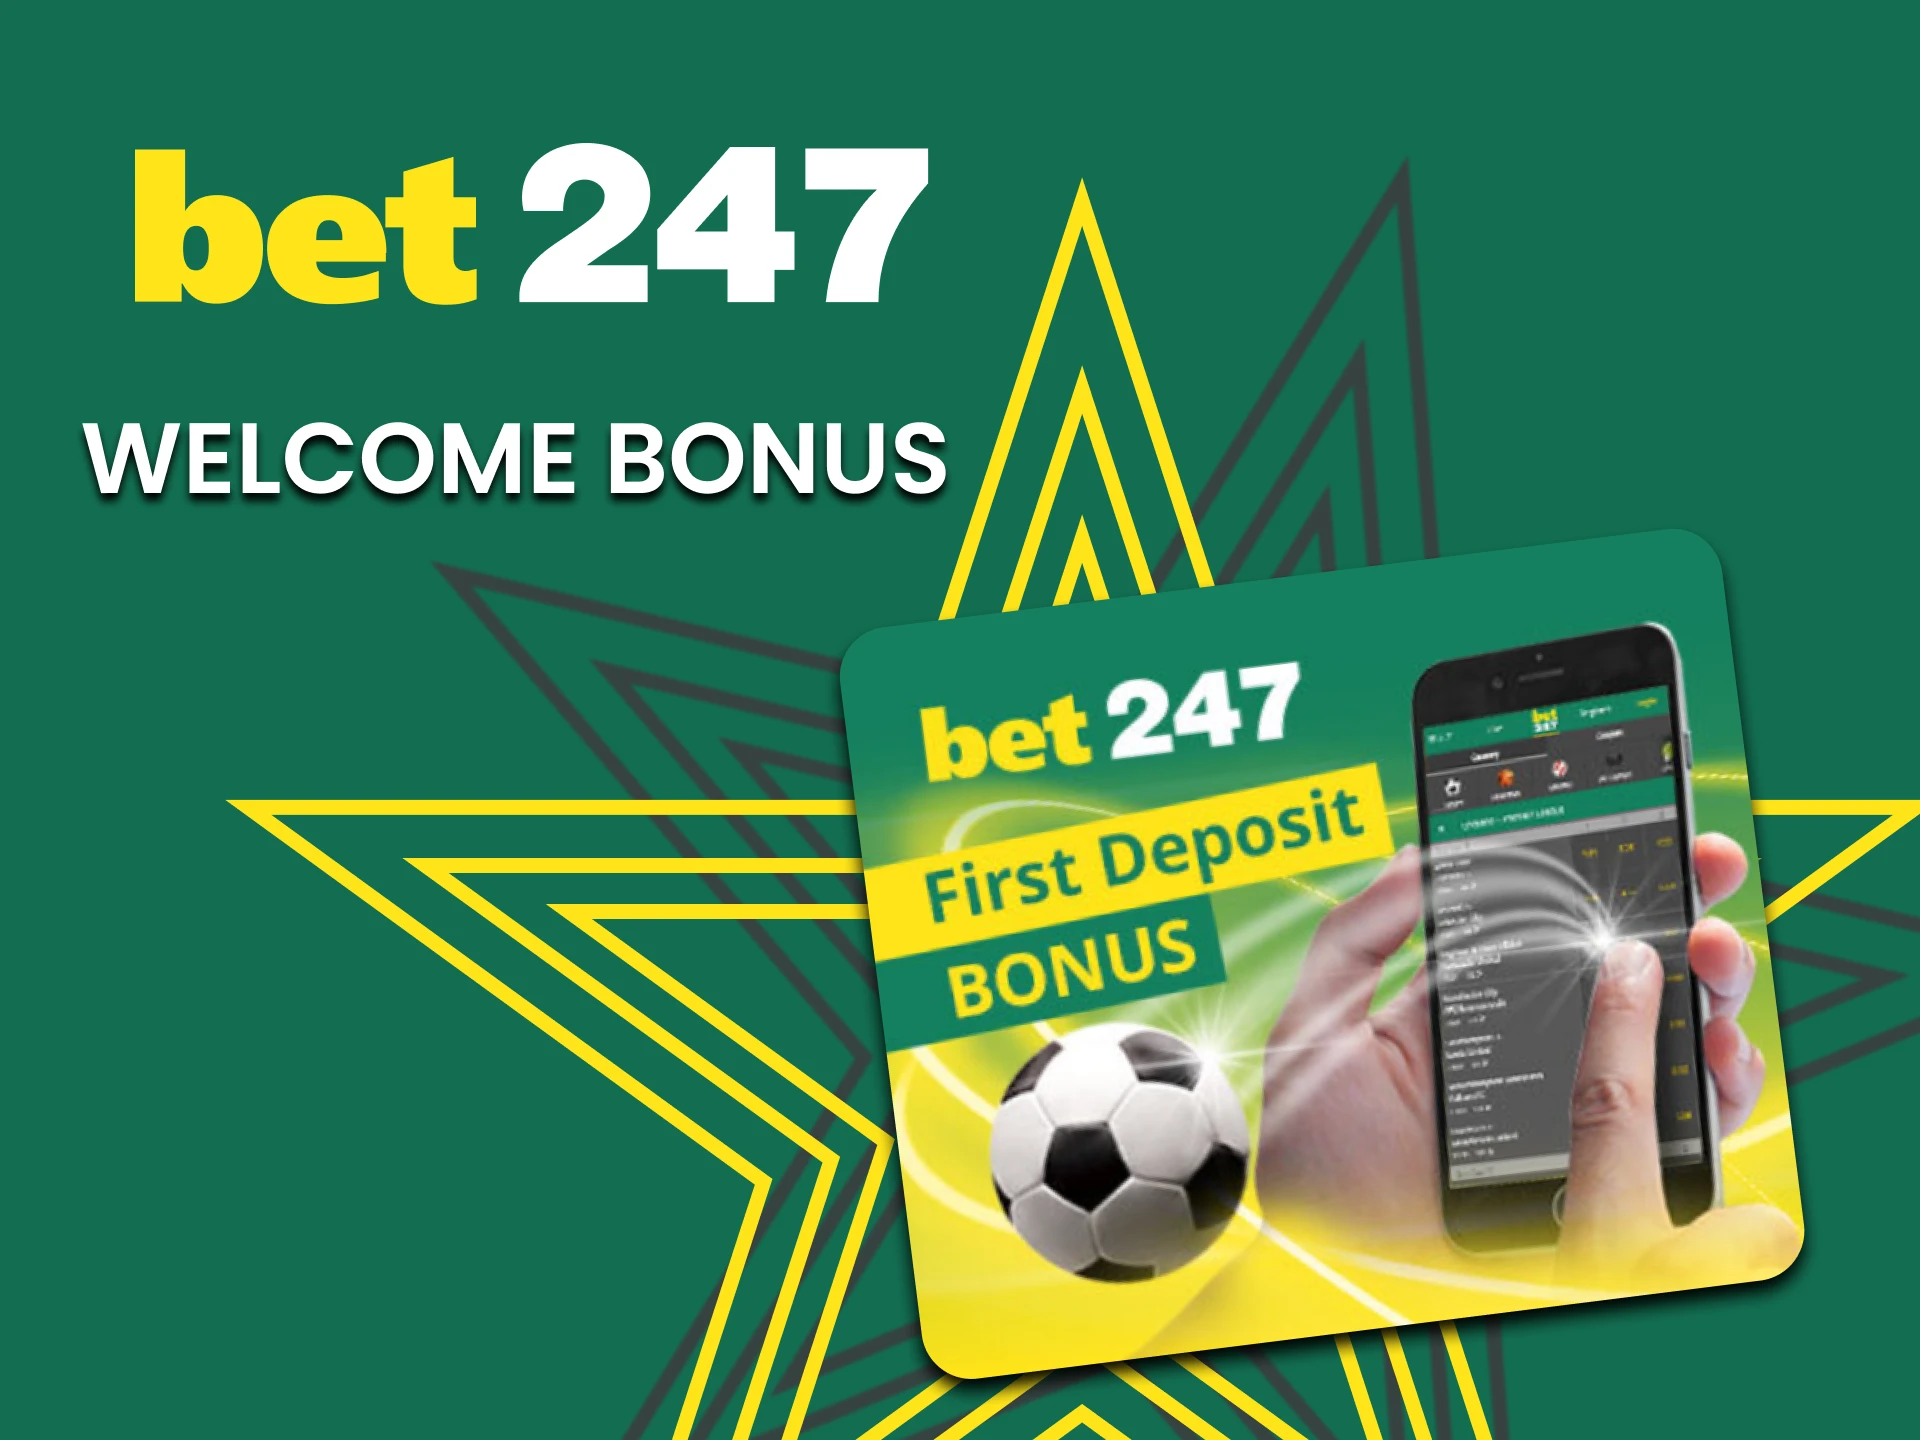 Get the best welcome bonus with Bet247.